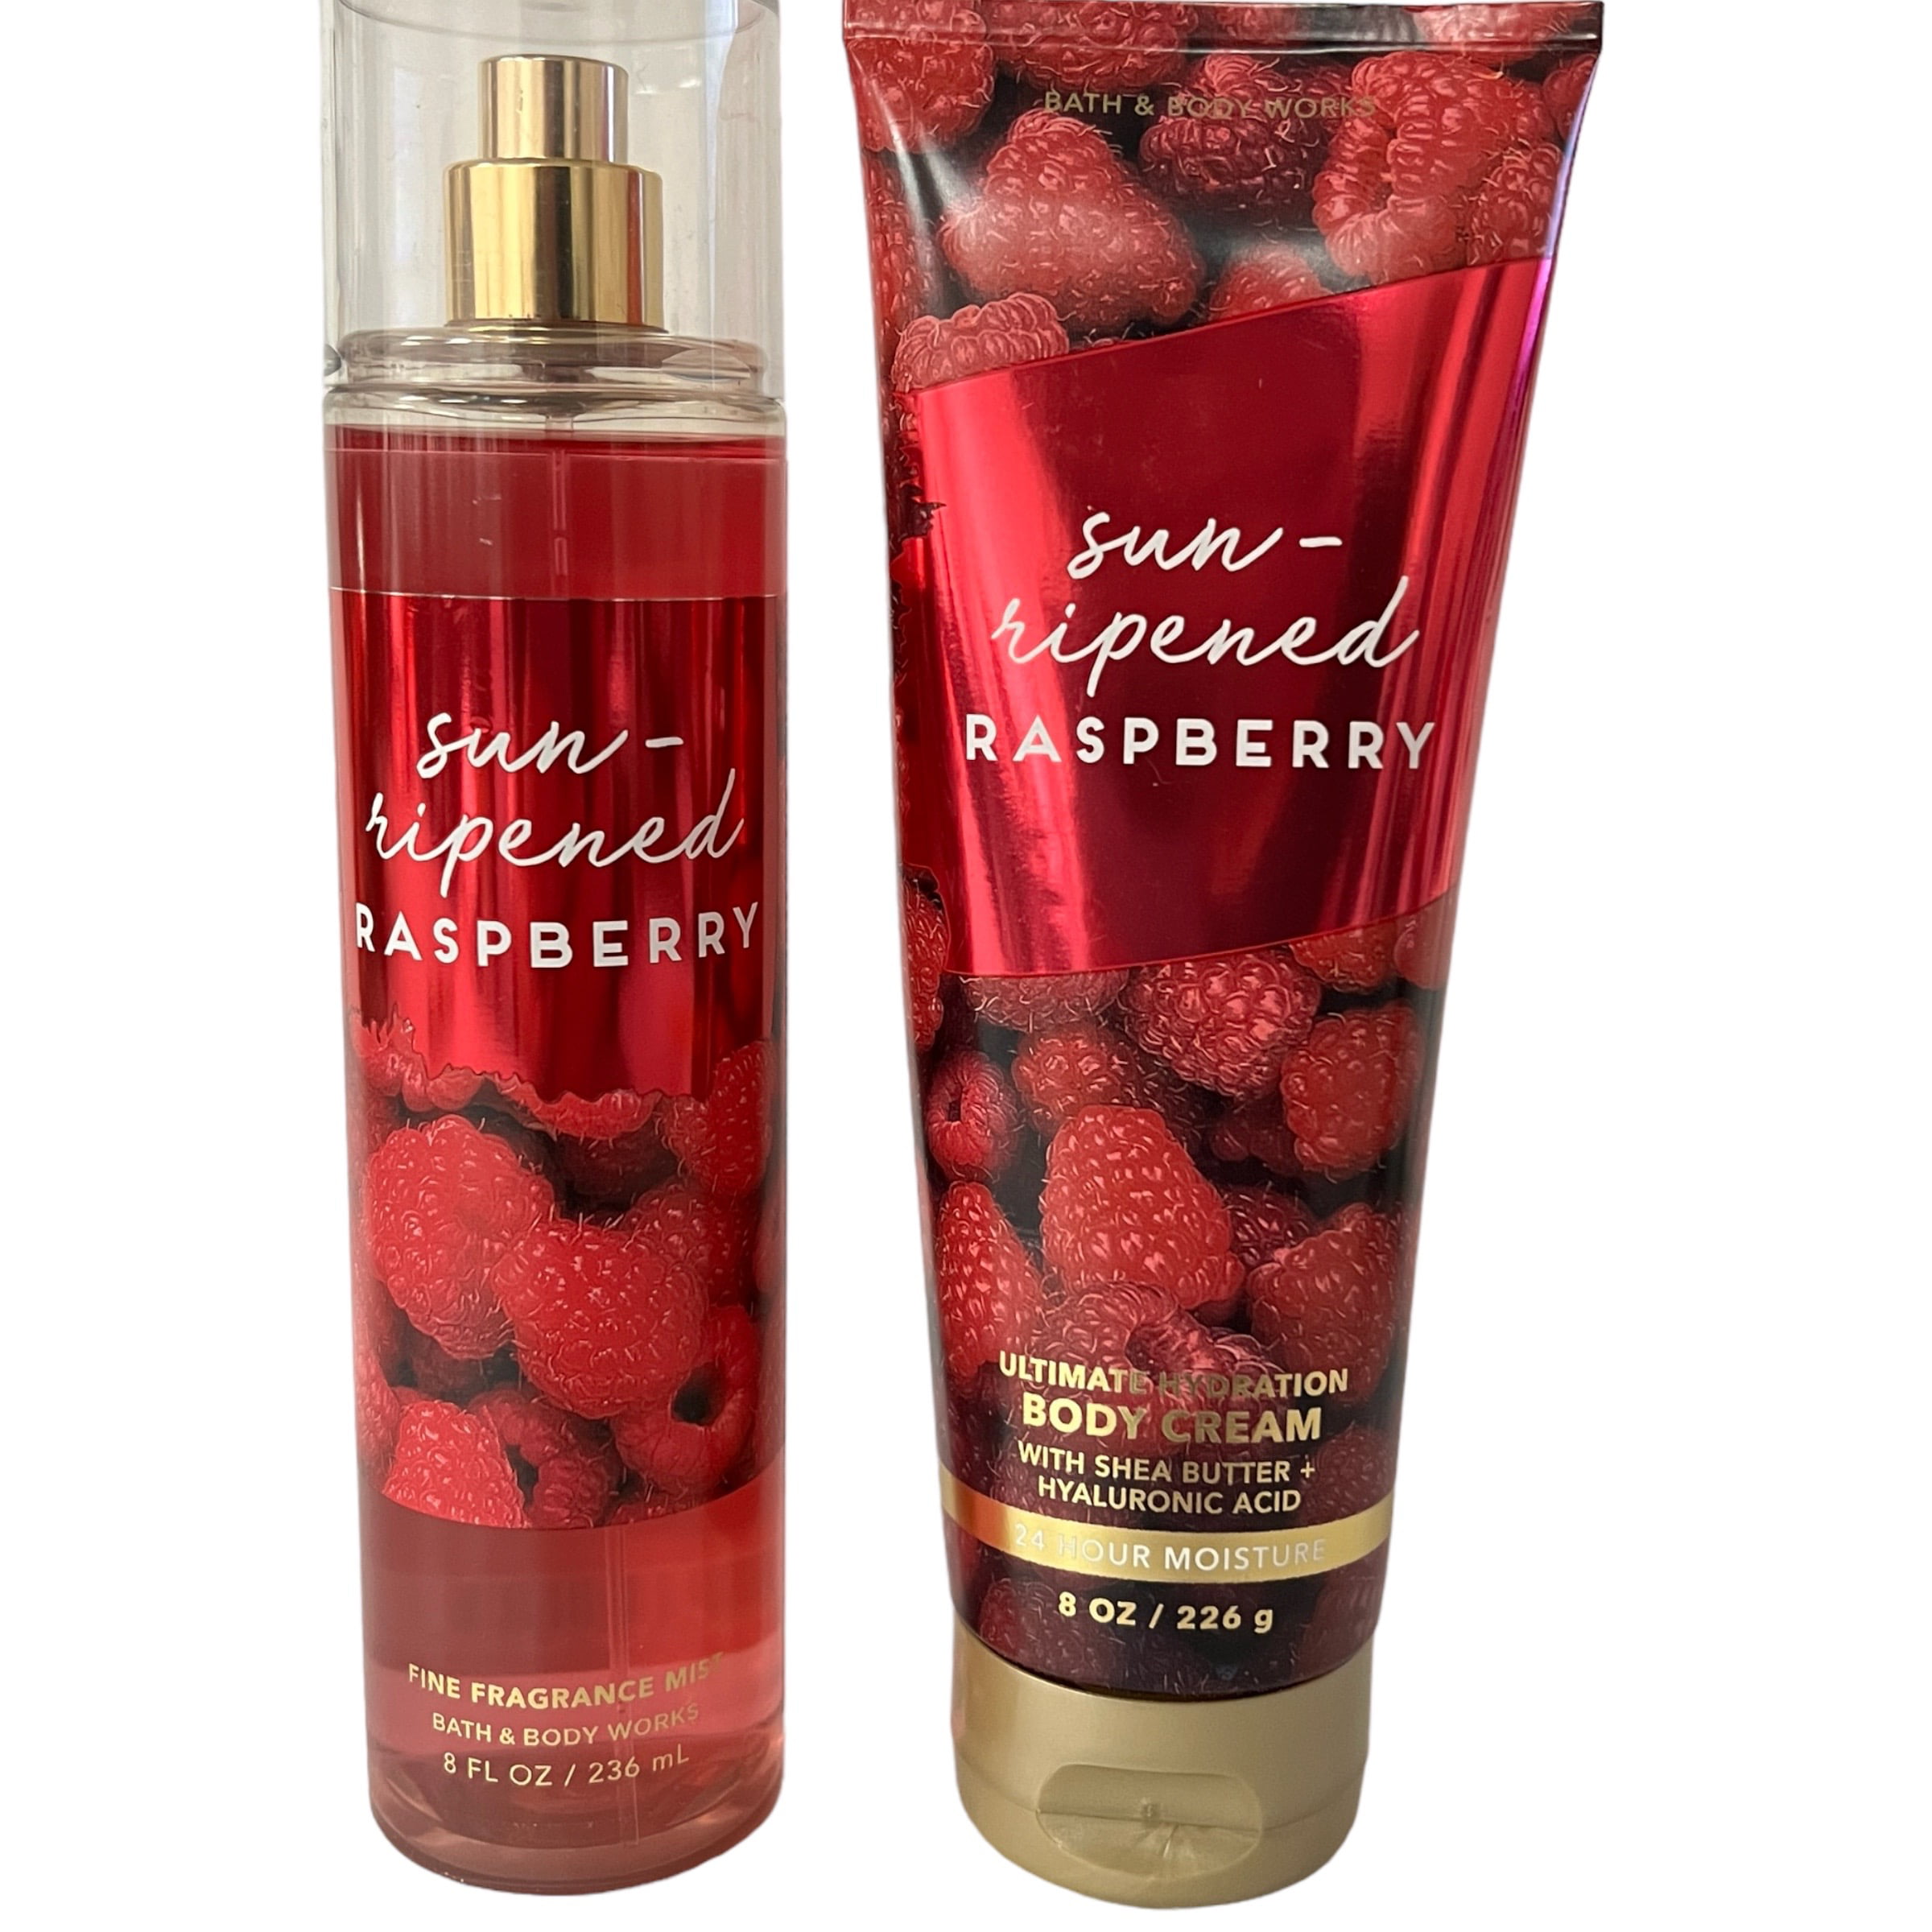 Bath and Body Works Sun Ripened Raspberry Fragrance Mist & Body Cream Set